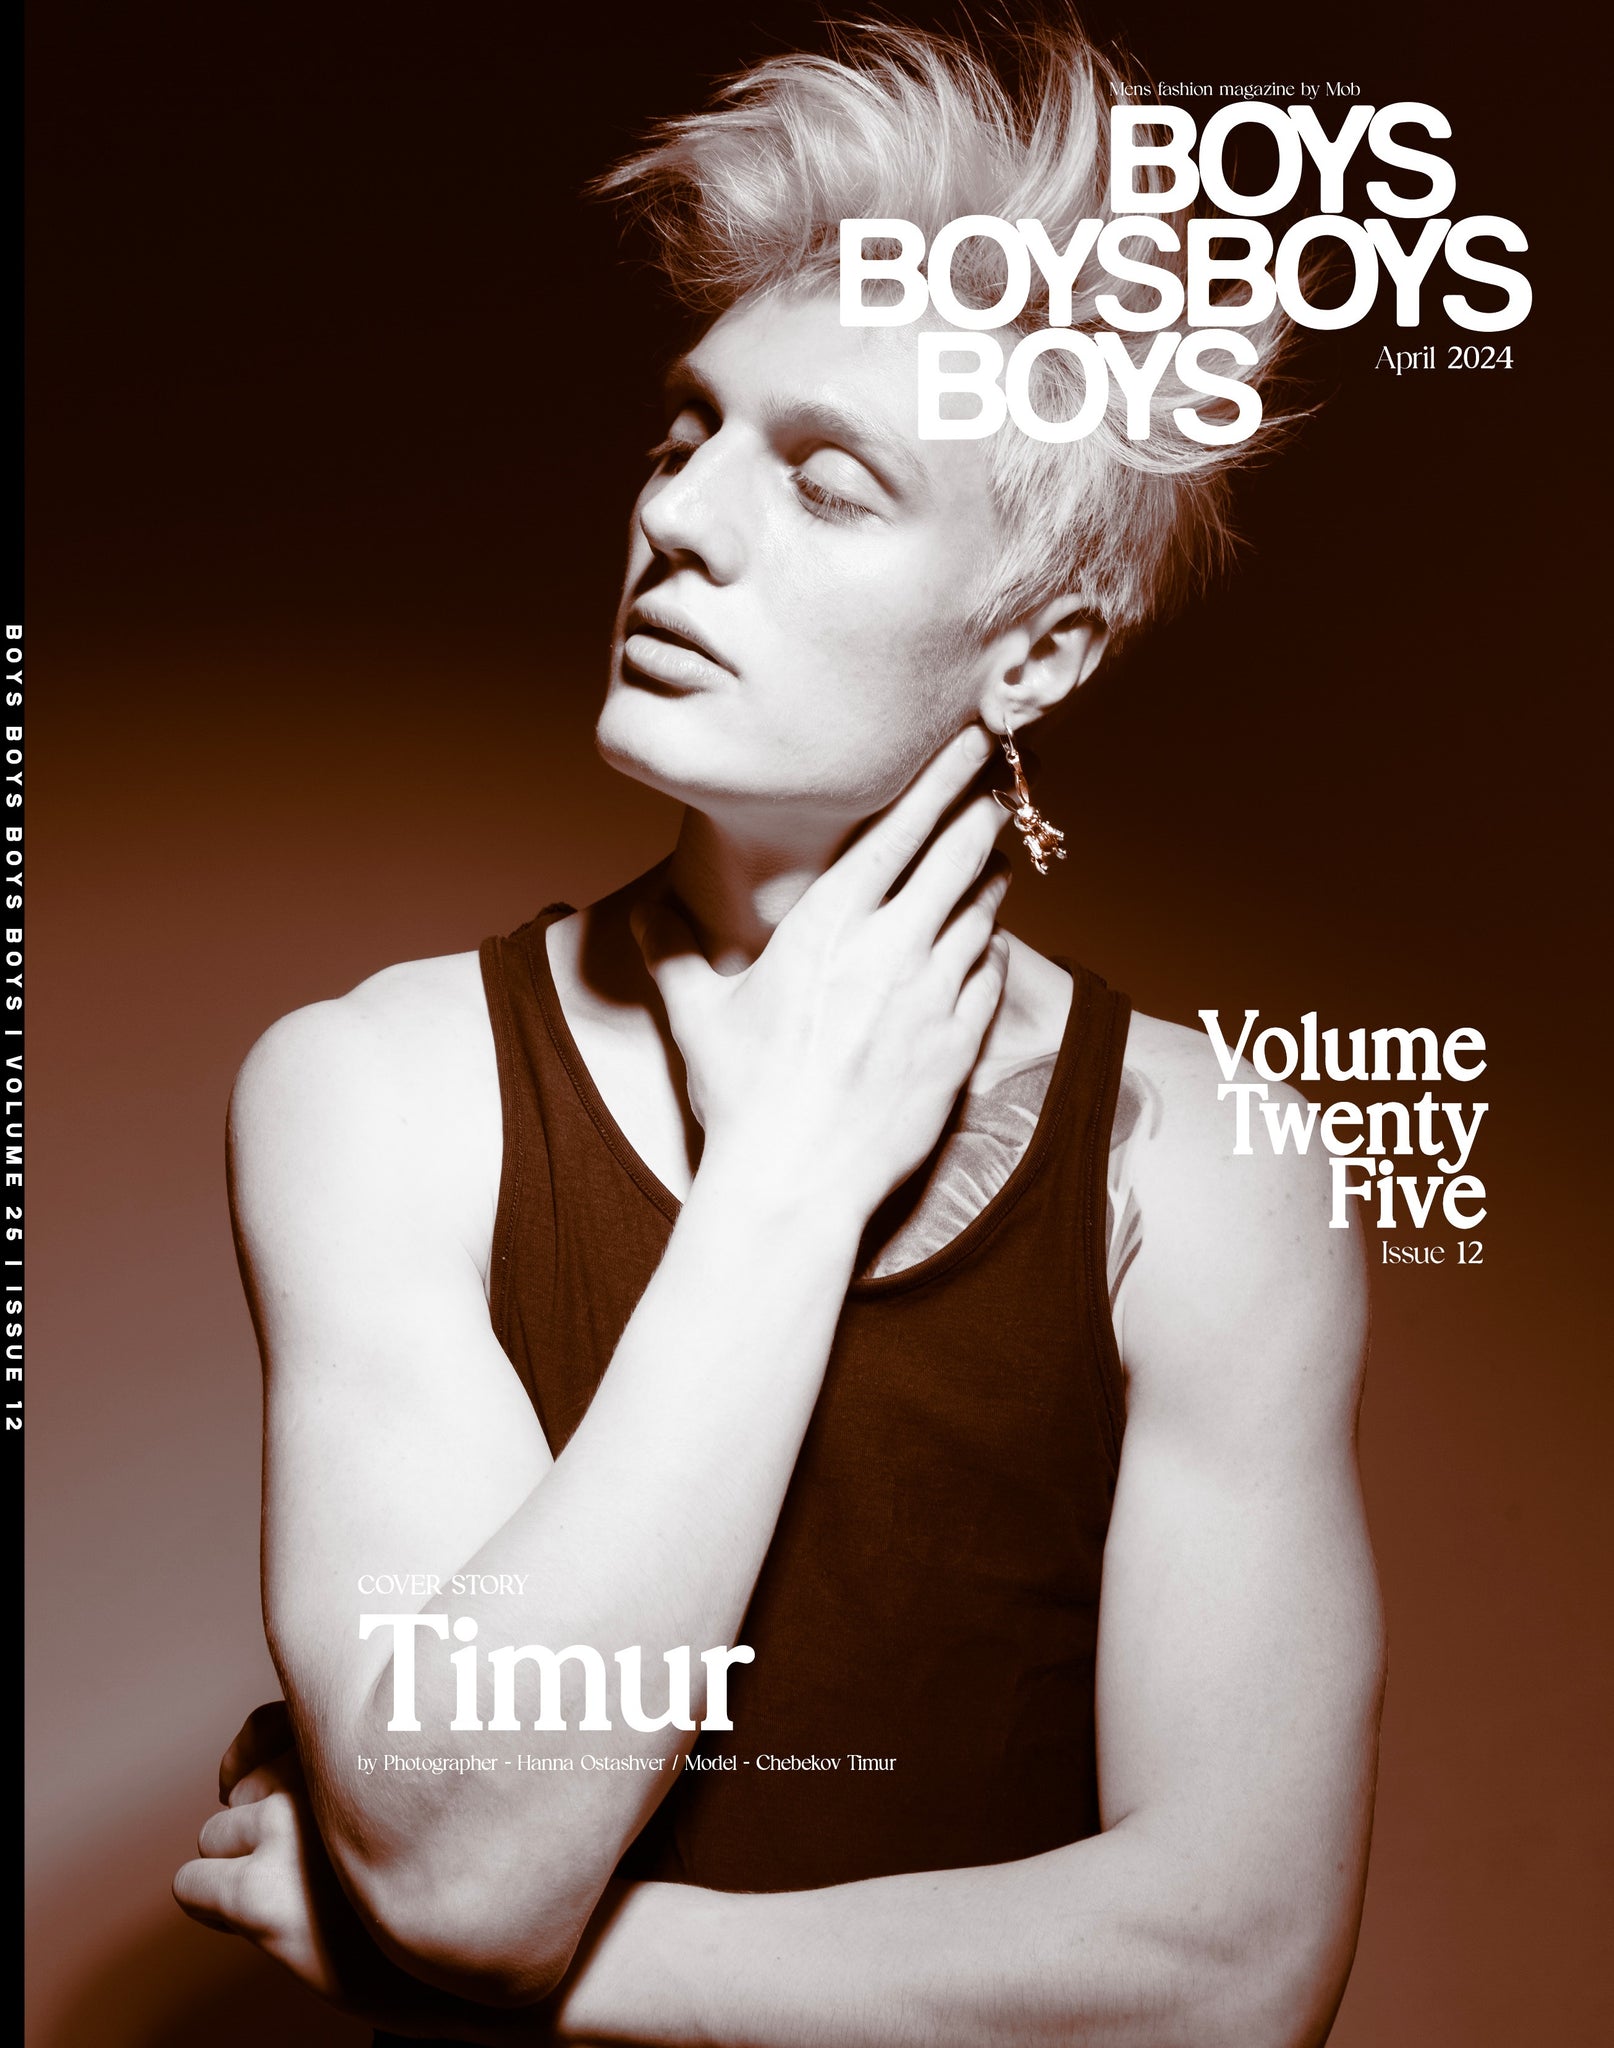 BOYS BOYS BOYS BOYS | VOLUME TWENTY FIVE | ISSUE #12